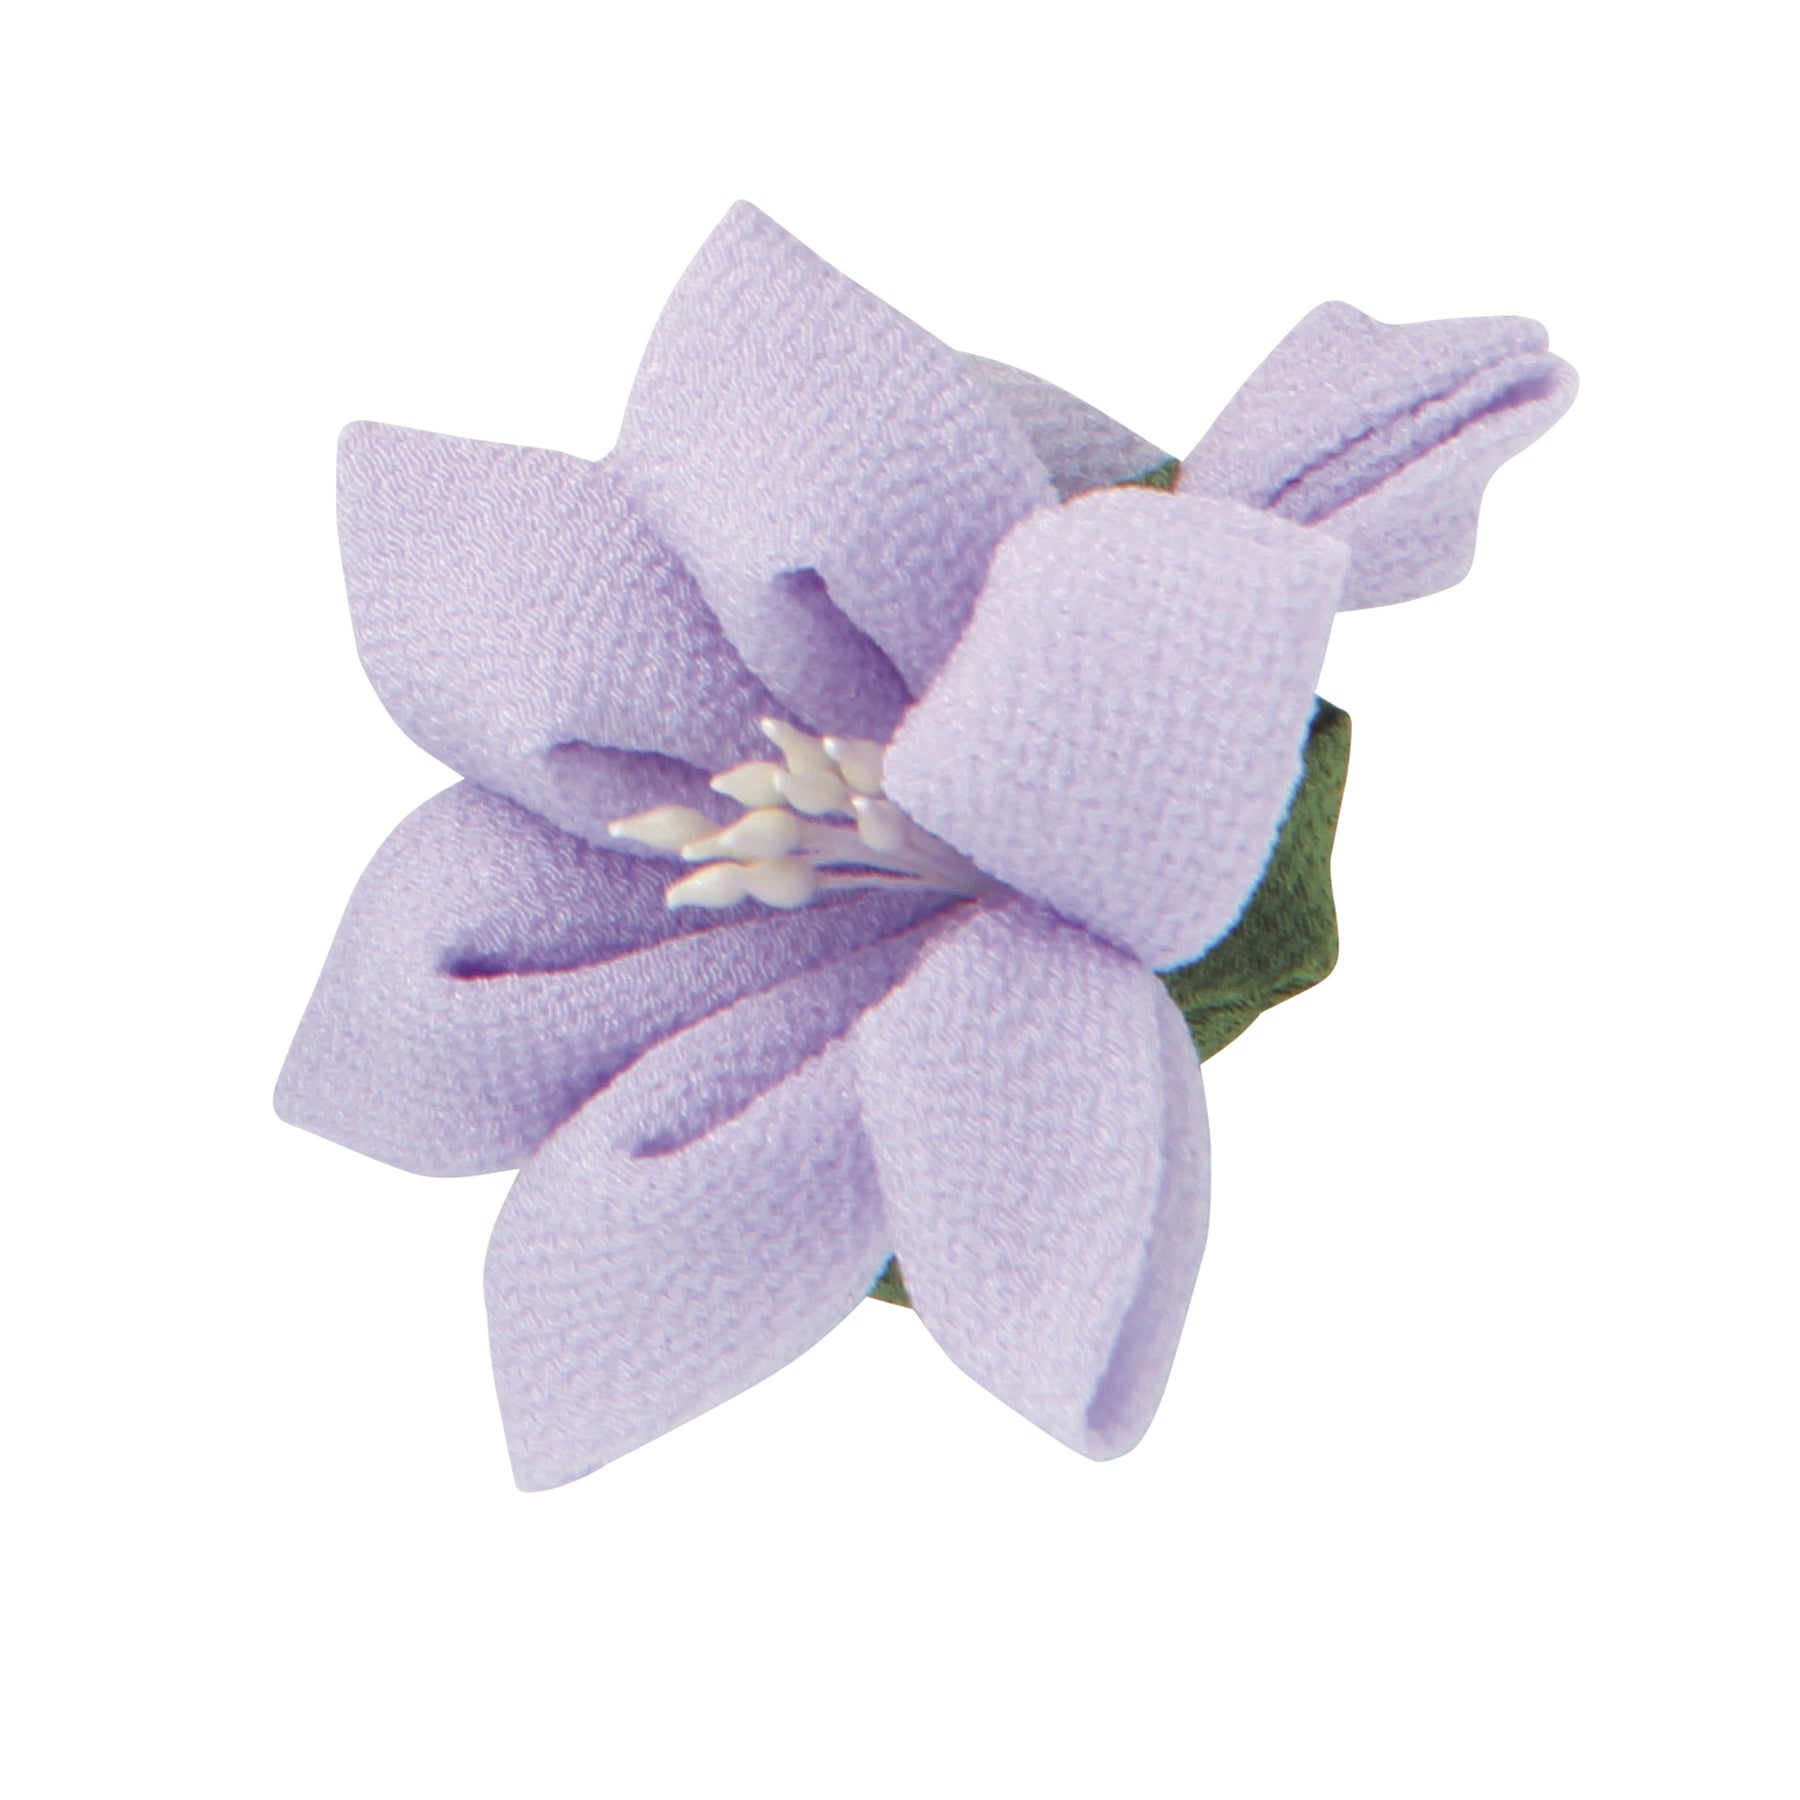 Olympus Tsumami Zaiku Flower Brooch Craft Kit  - Lilac Lily